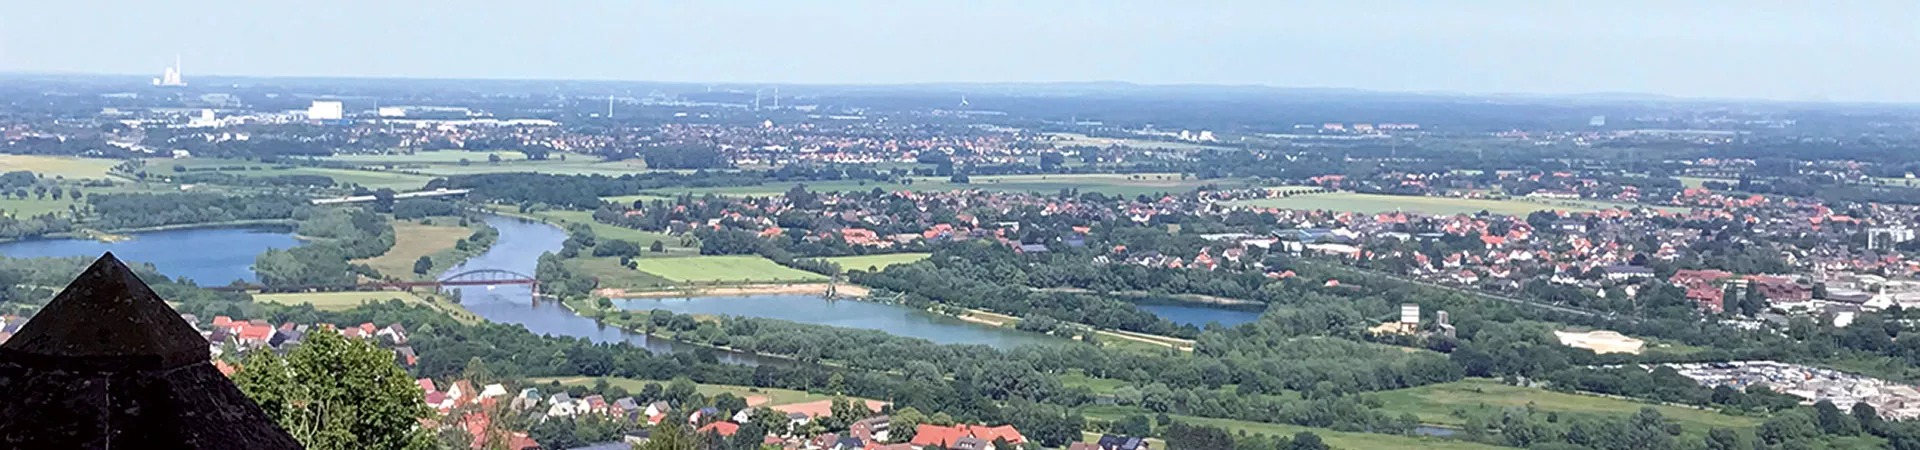 Titelbild-Aussicht-Porta-Westfalica-Leserreise-2018_26-06-2018_2159e